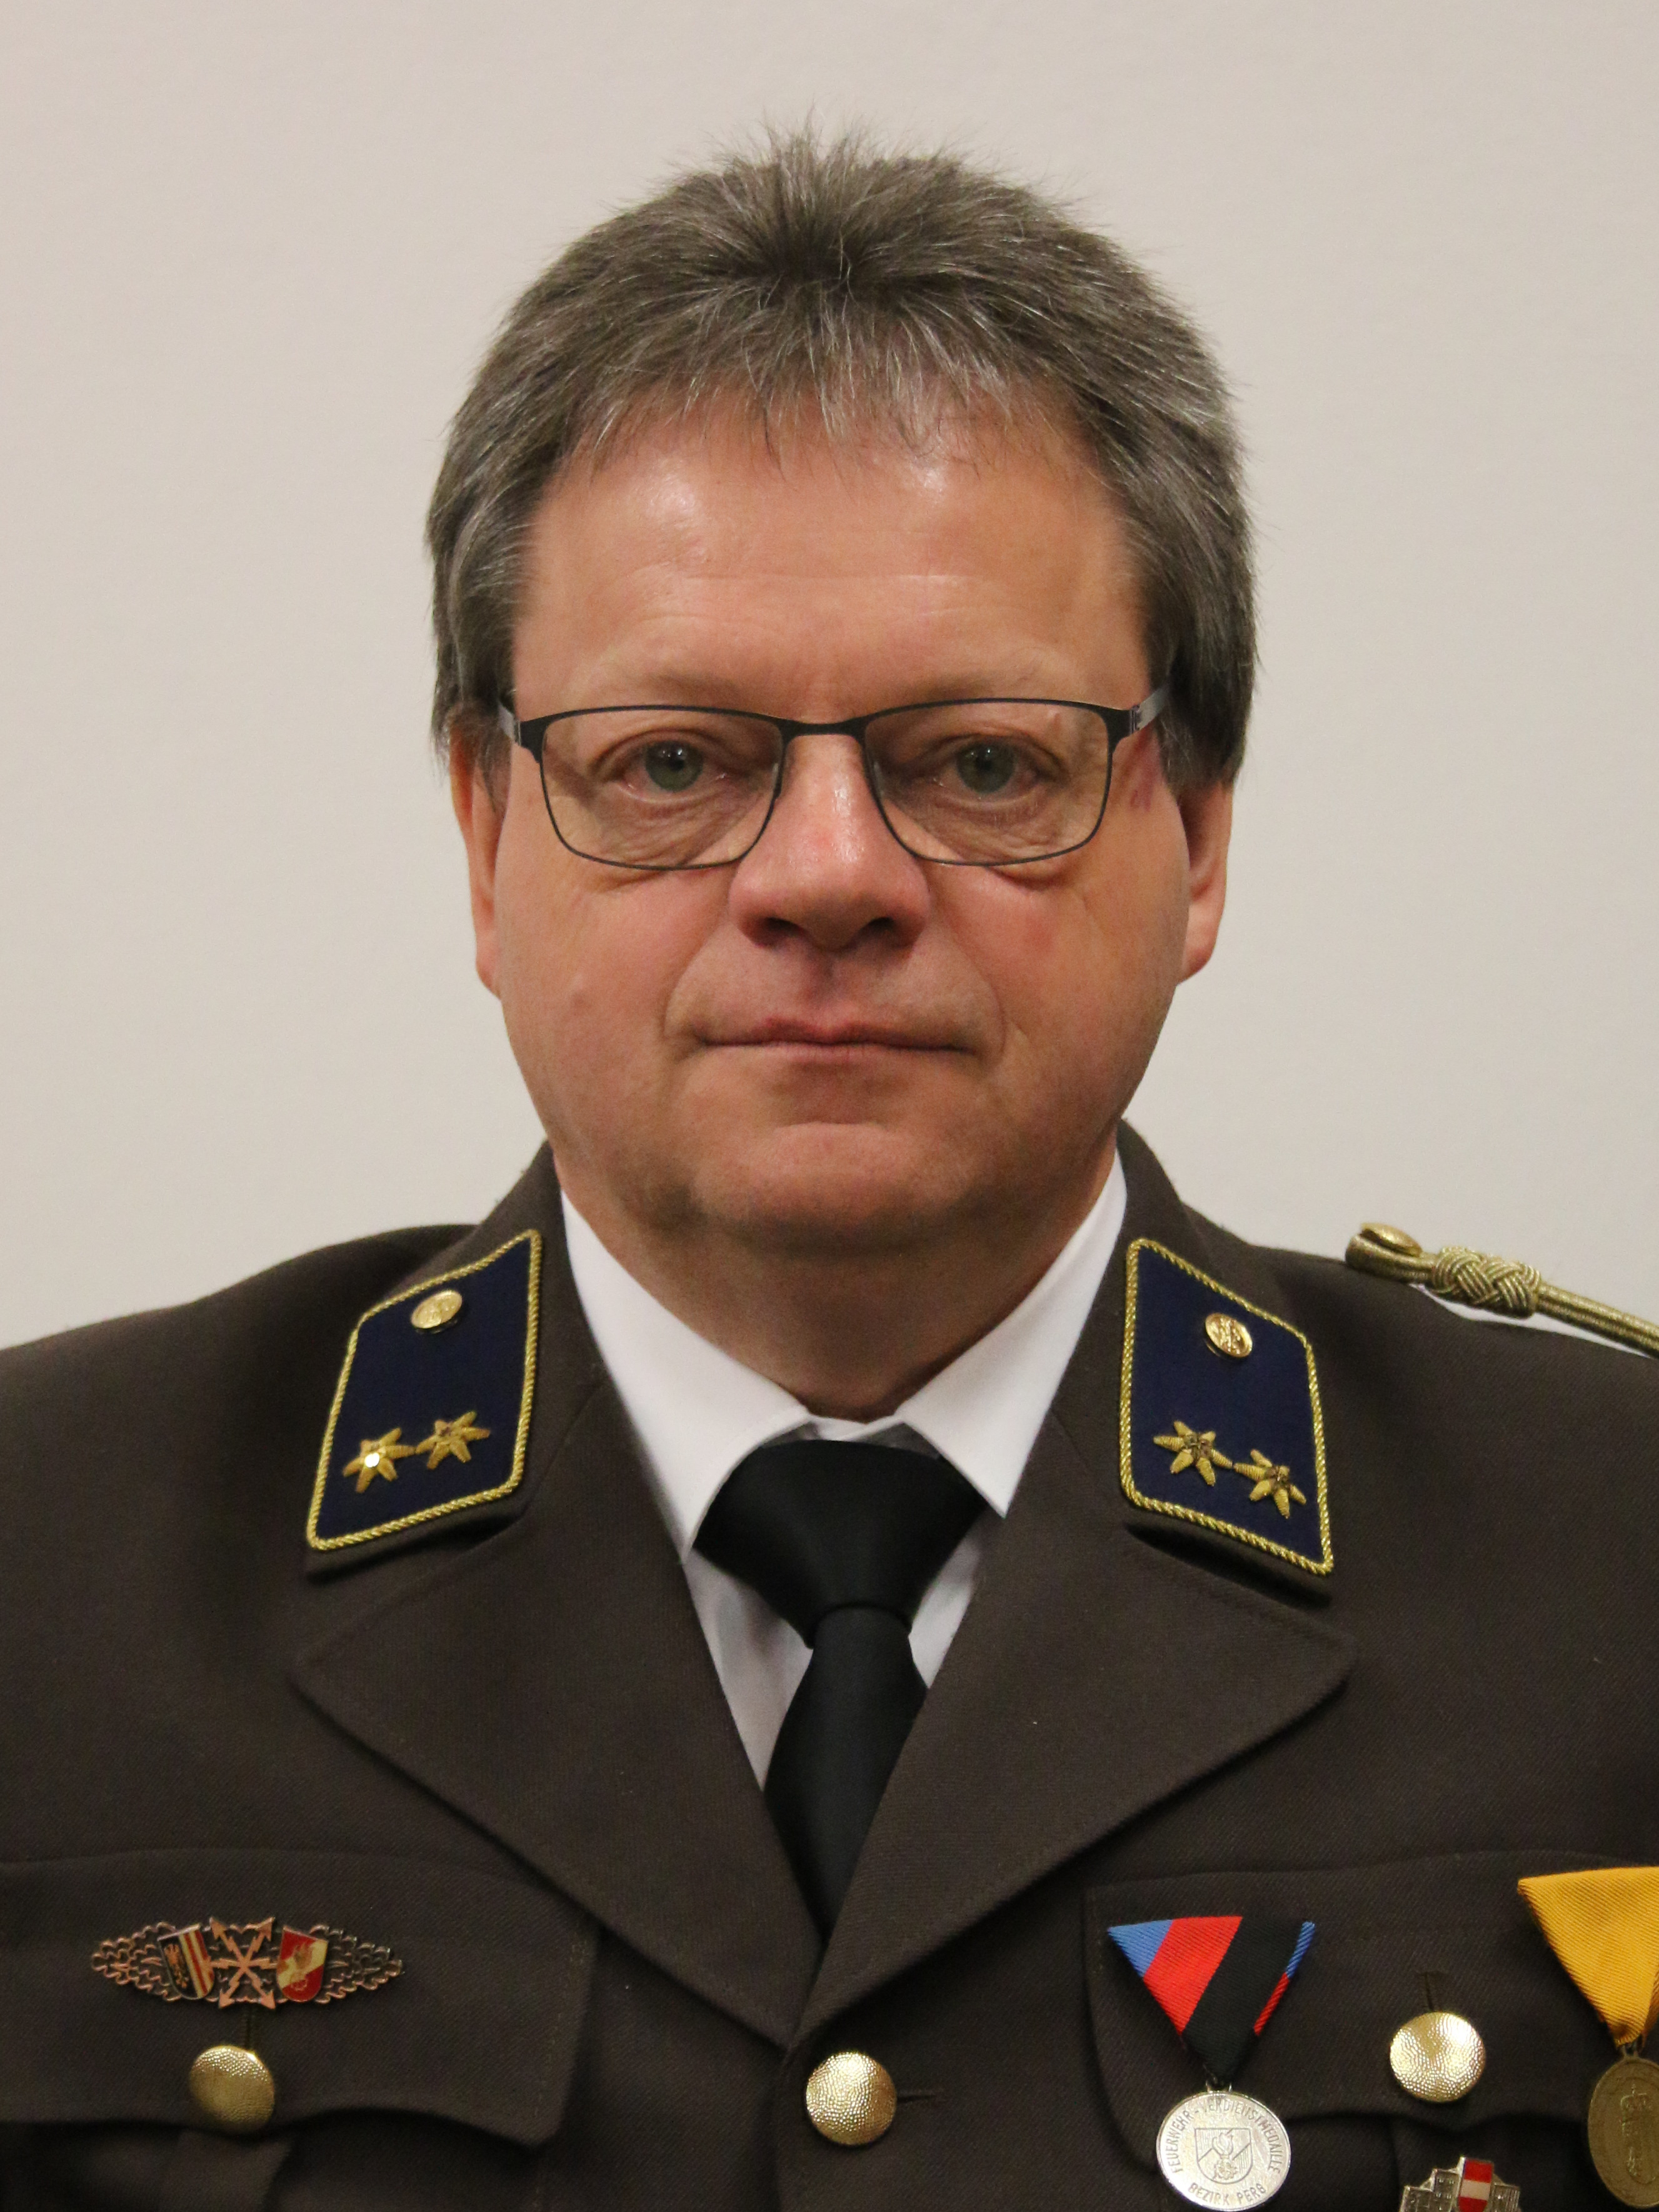 Wolfgang Etzelsdorfer